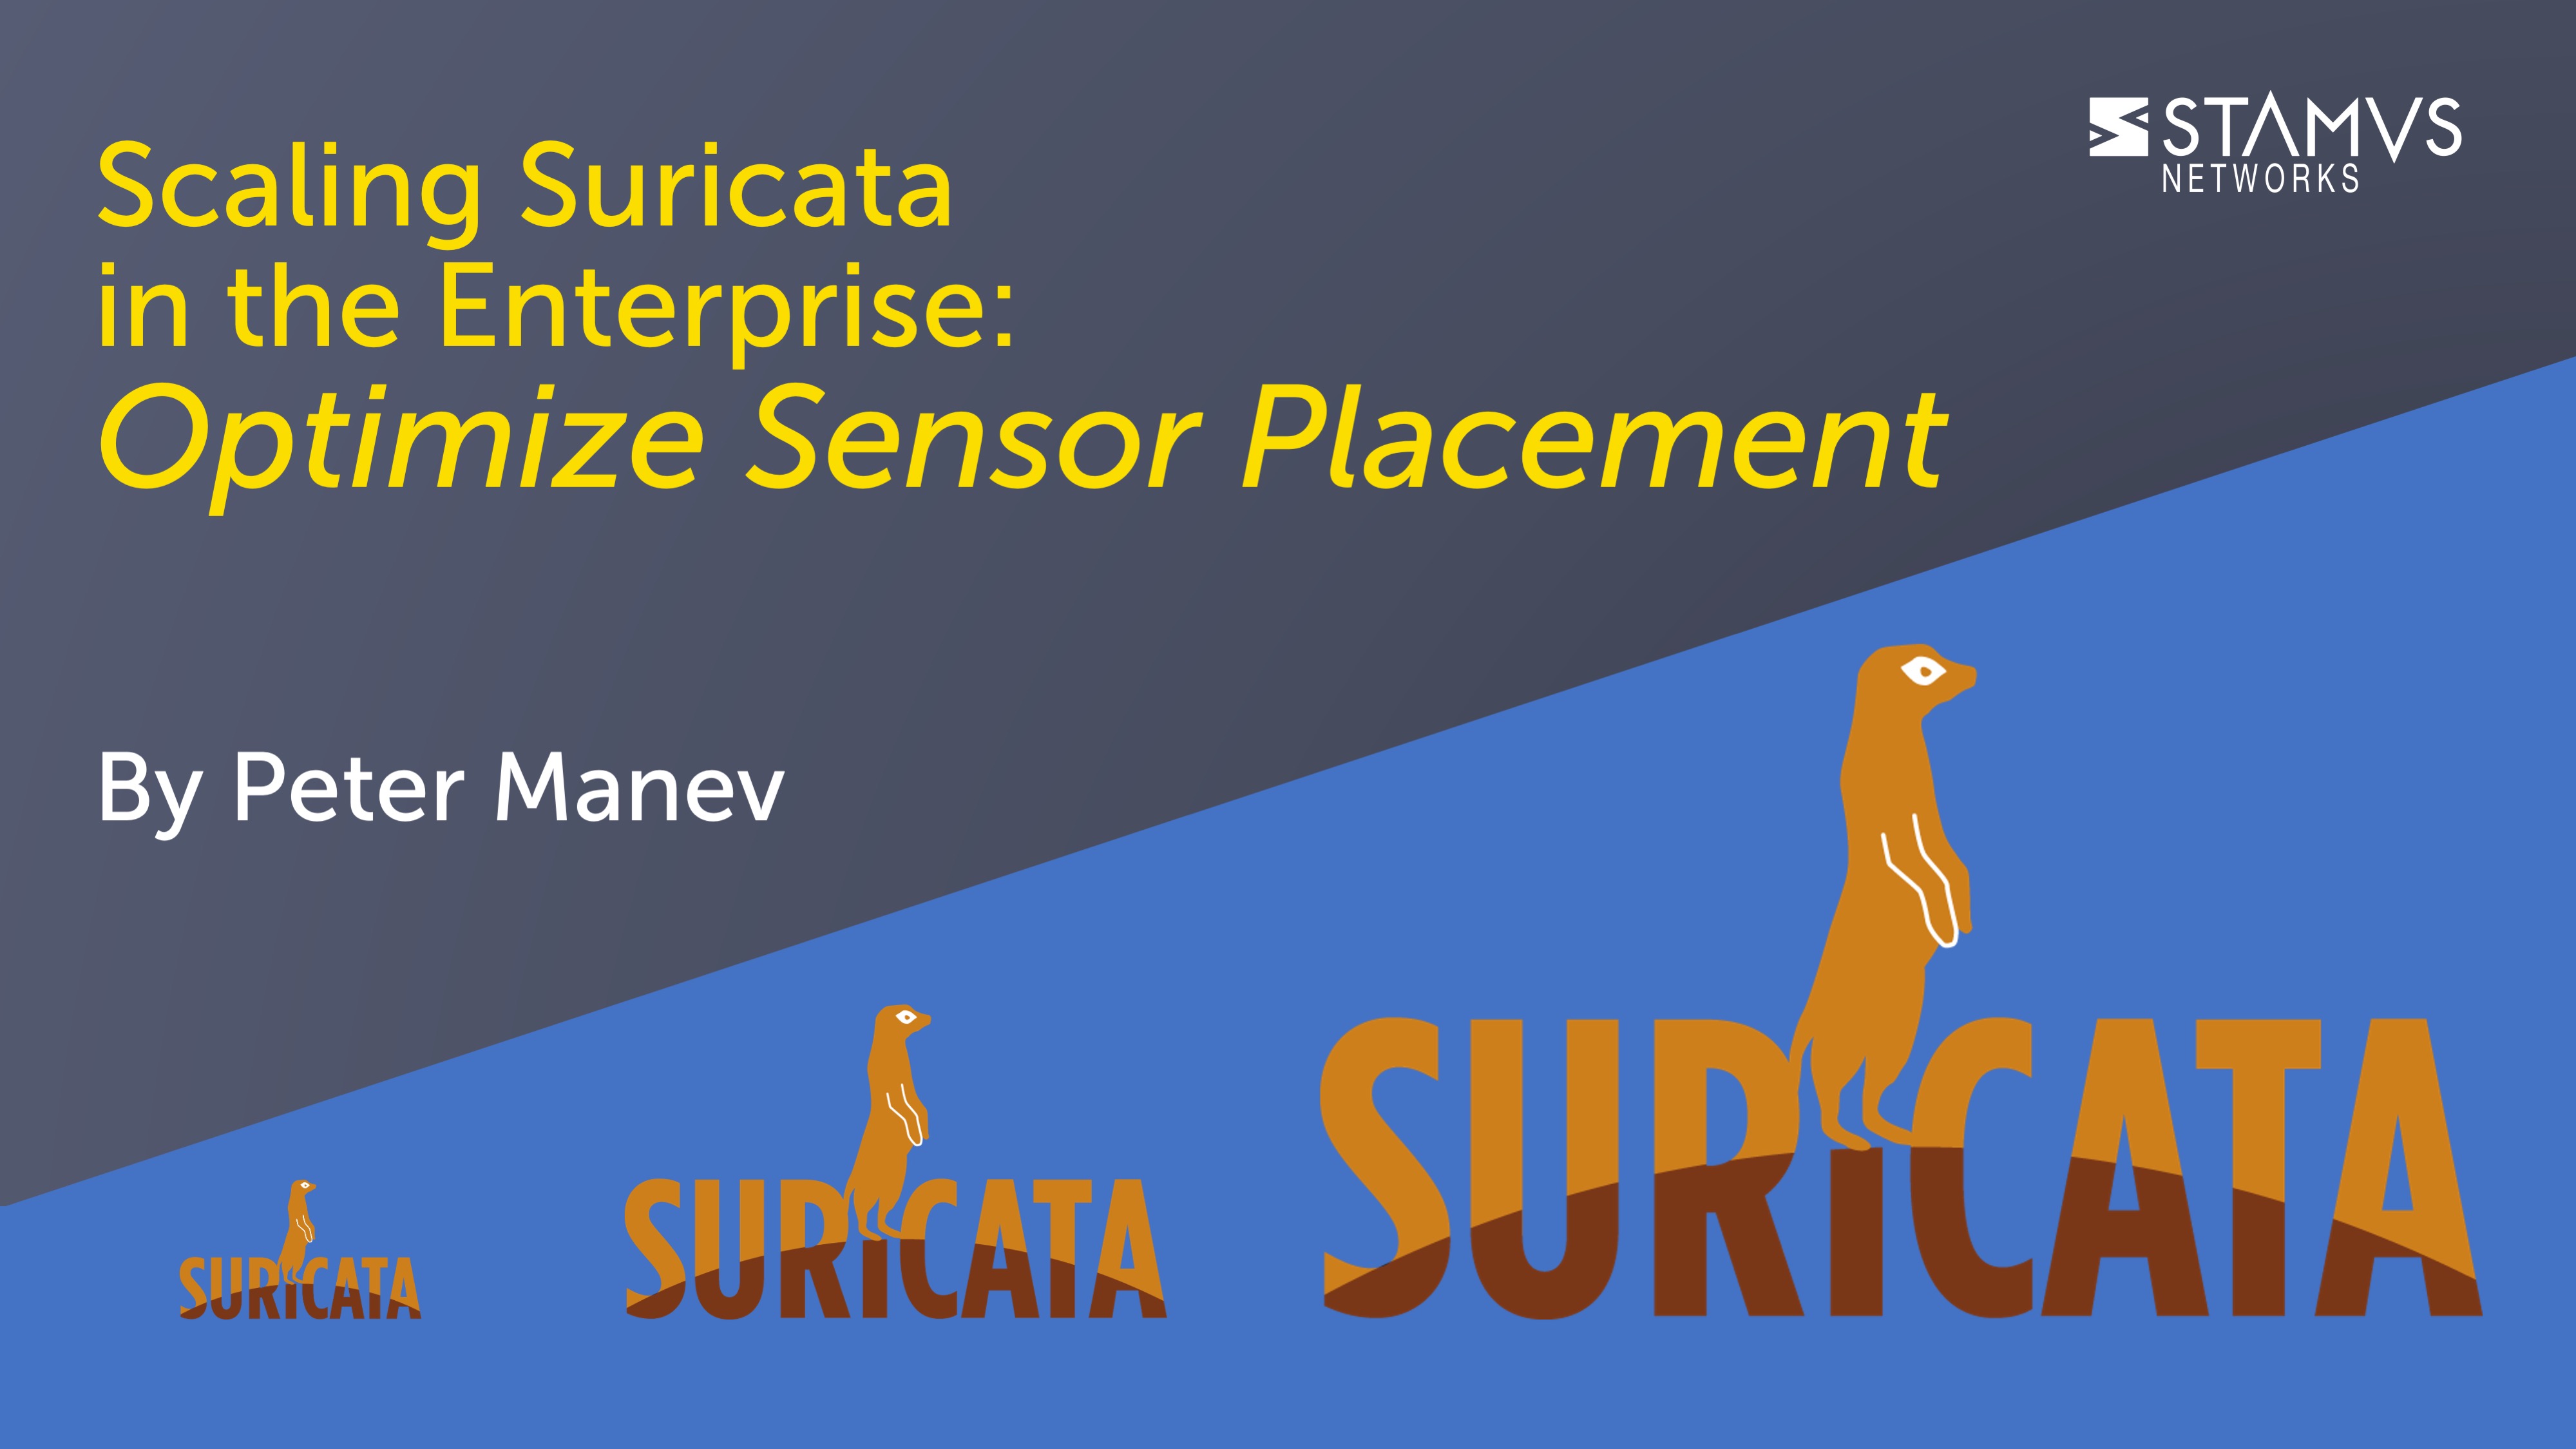 IMAGE: Scaling Suricata in the Enterprise - Optimize Sensor Placement